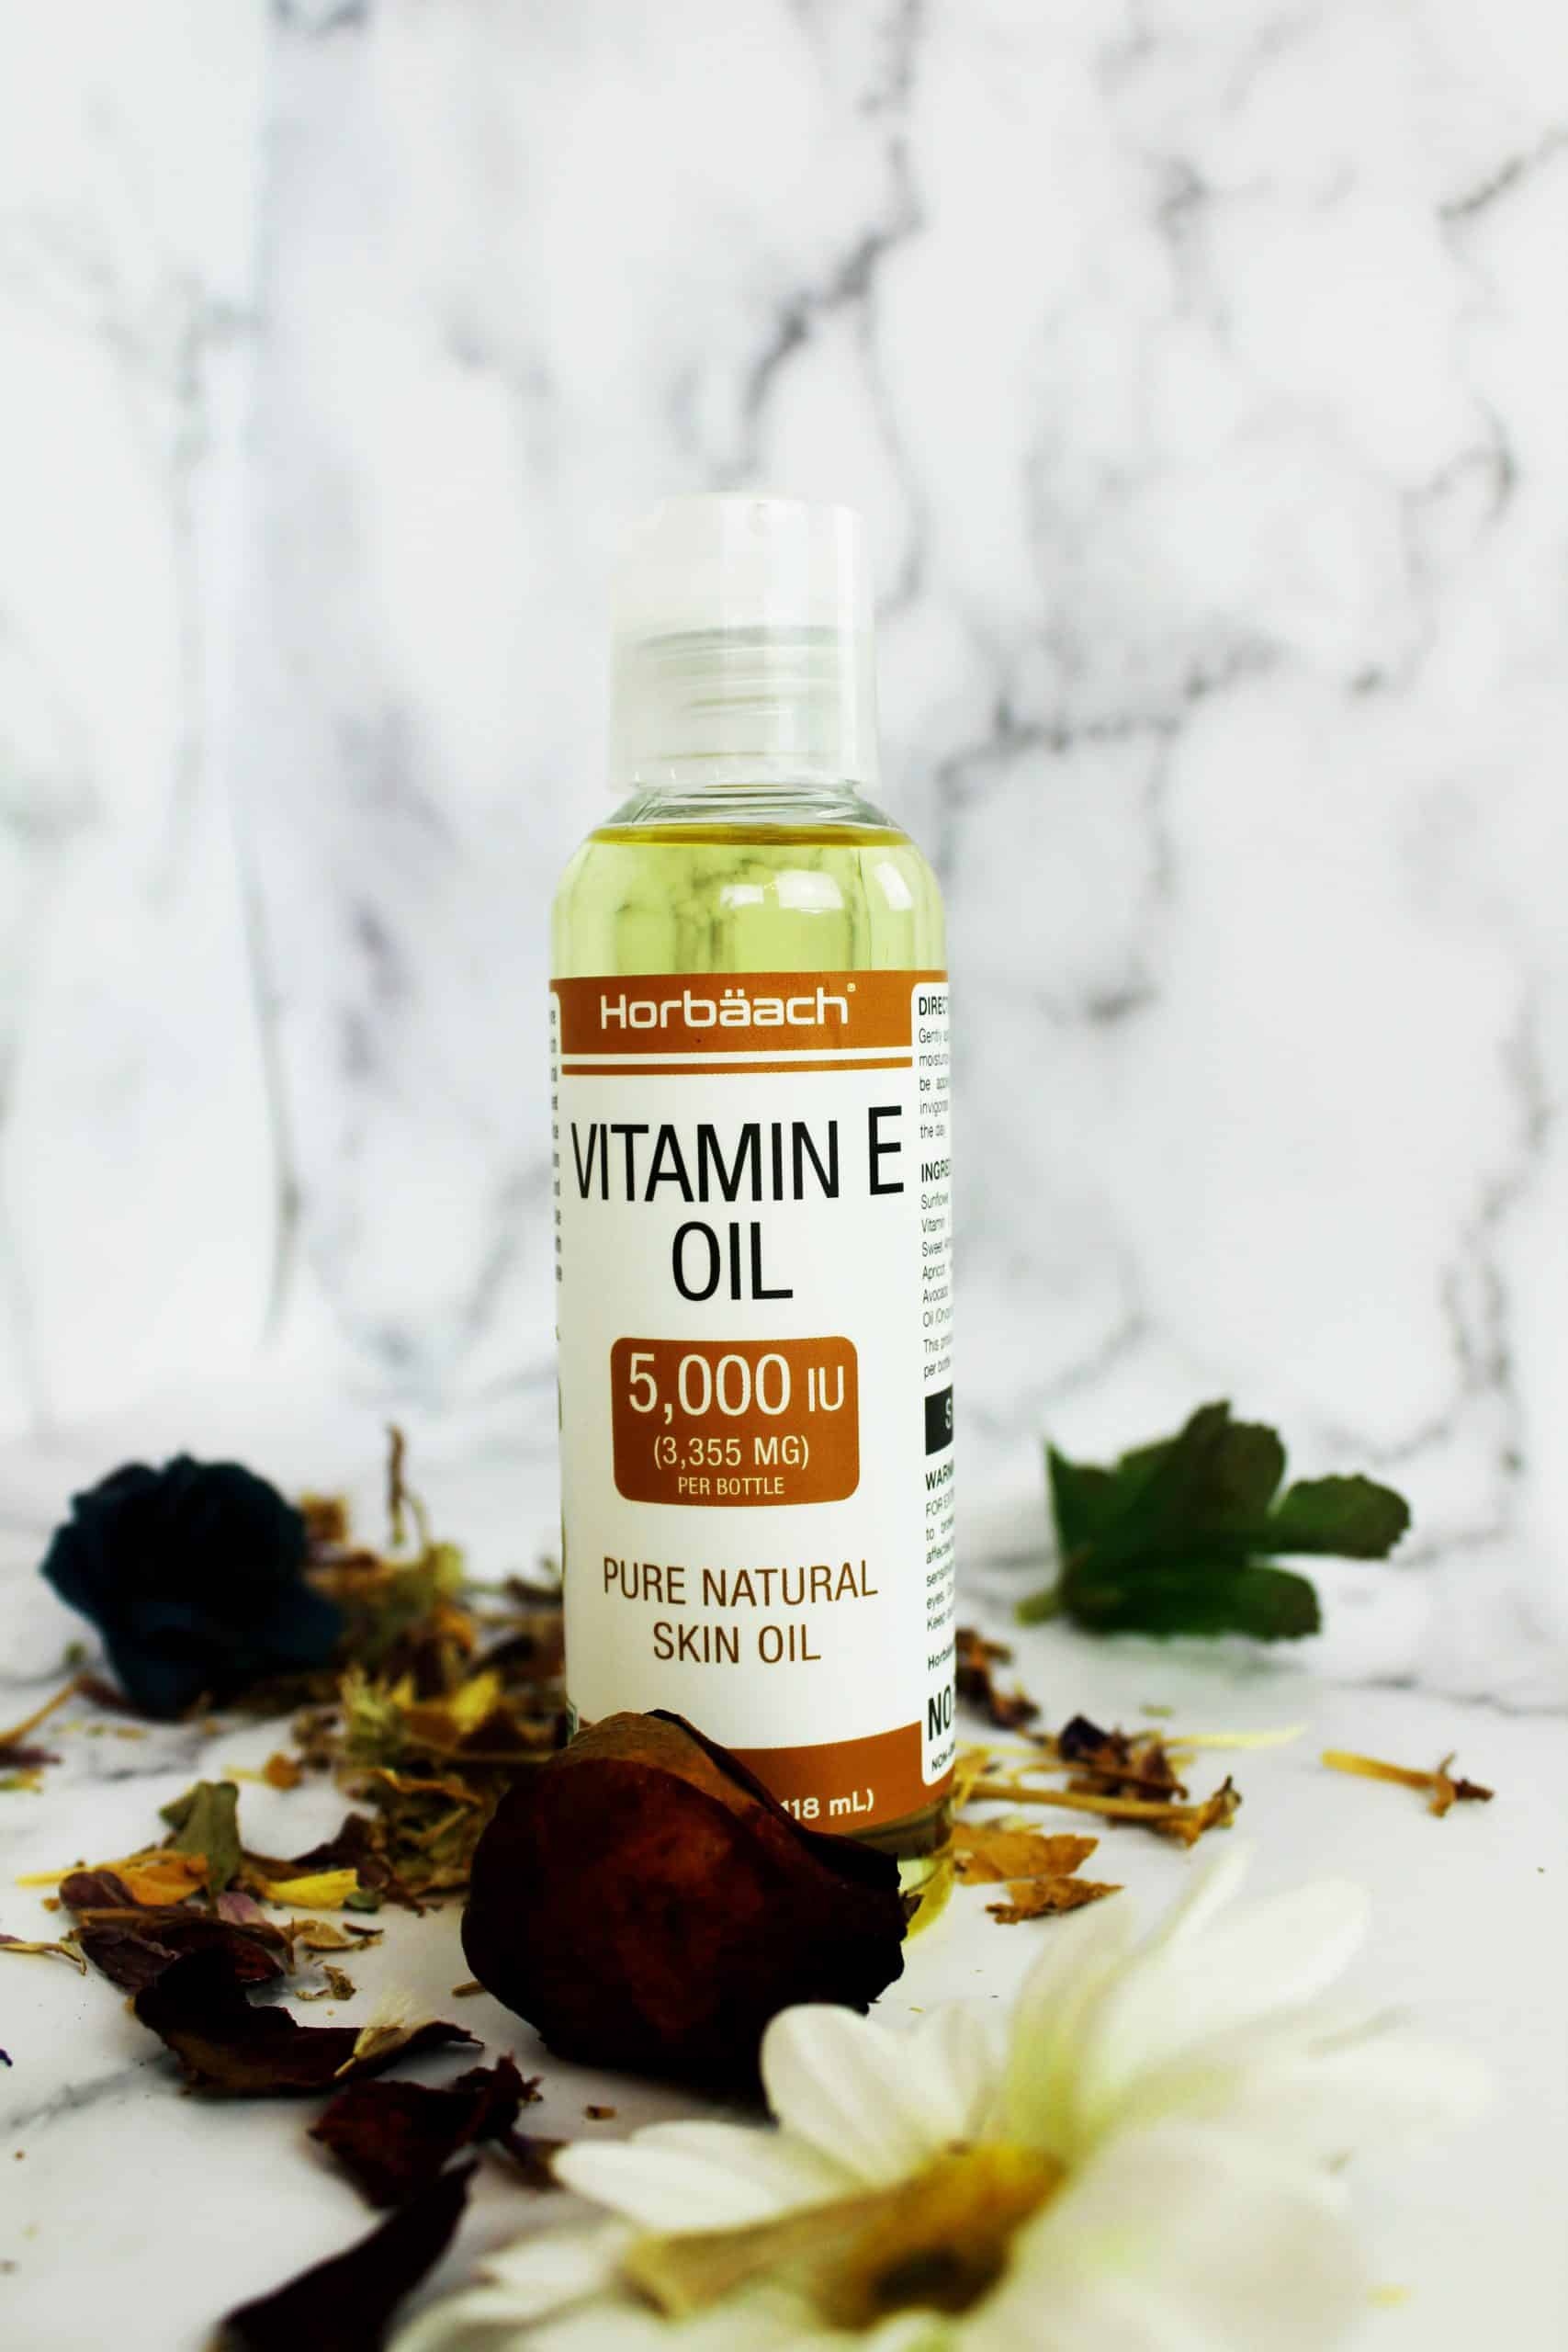 Why Vitamin E Oil scaled